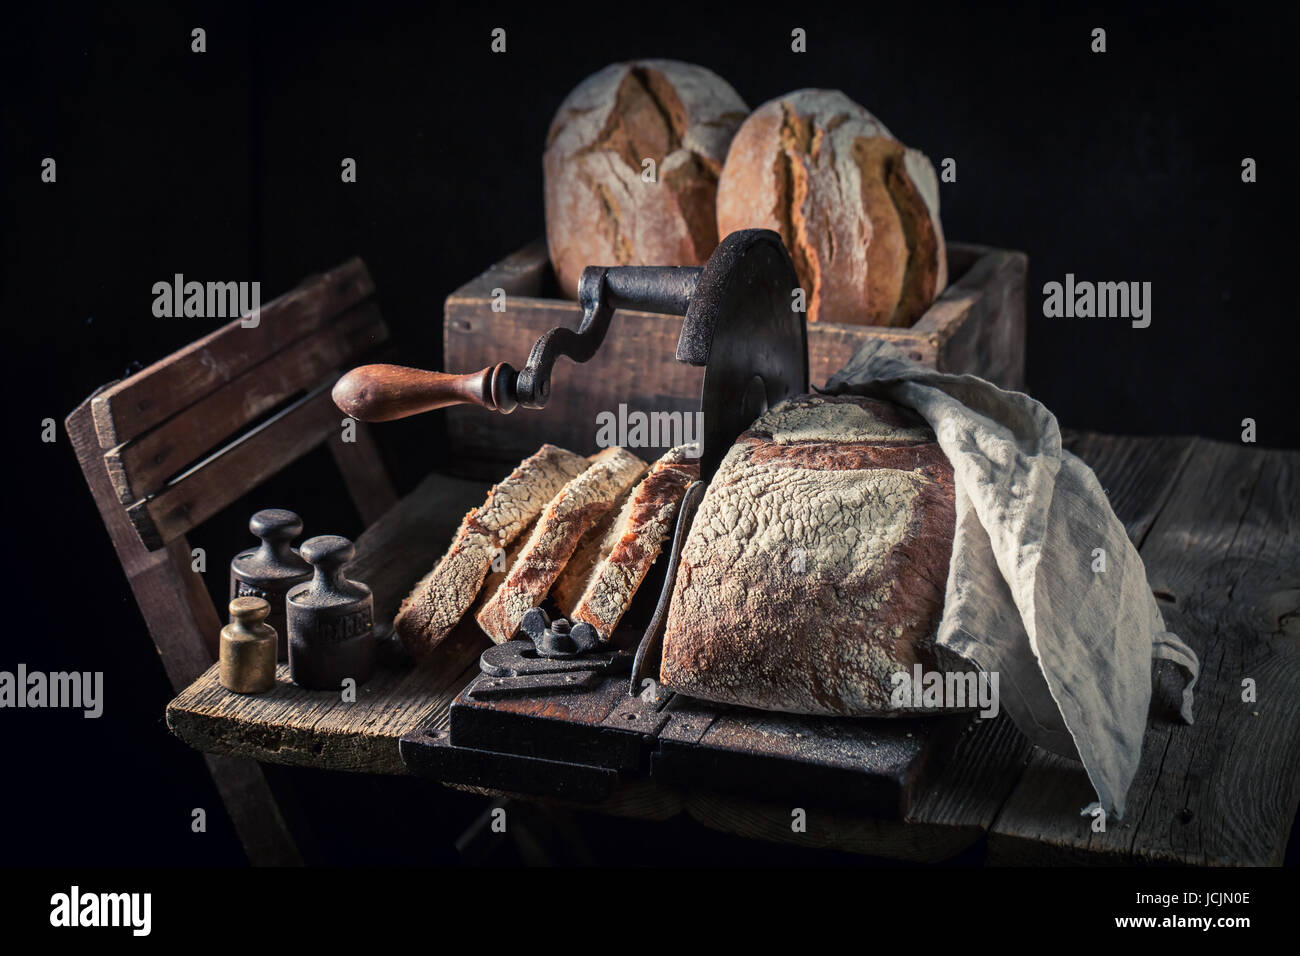 https://c8.alamy.com/comp/JCJN0E/big-loaf-of-bread-on-old-wooden-table-JCJN0E.jpg